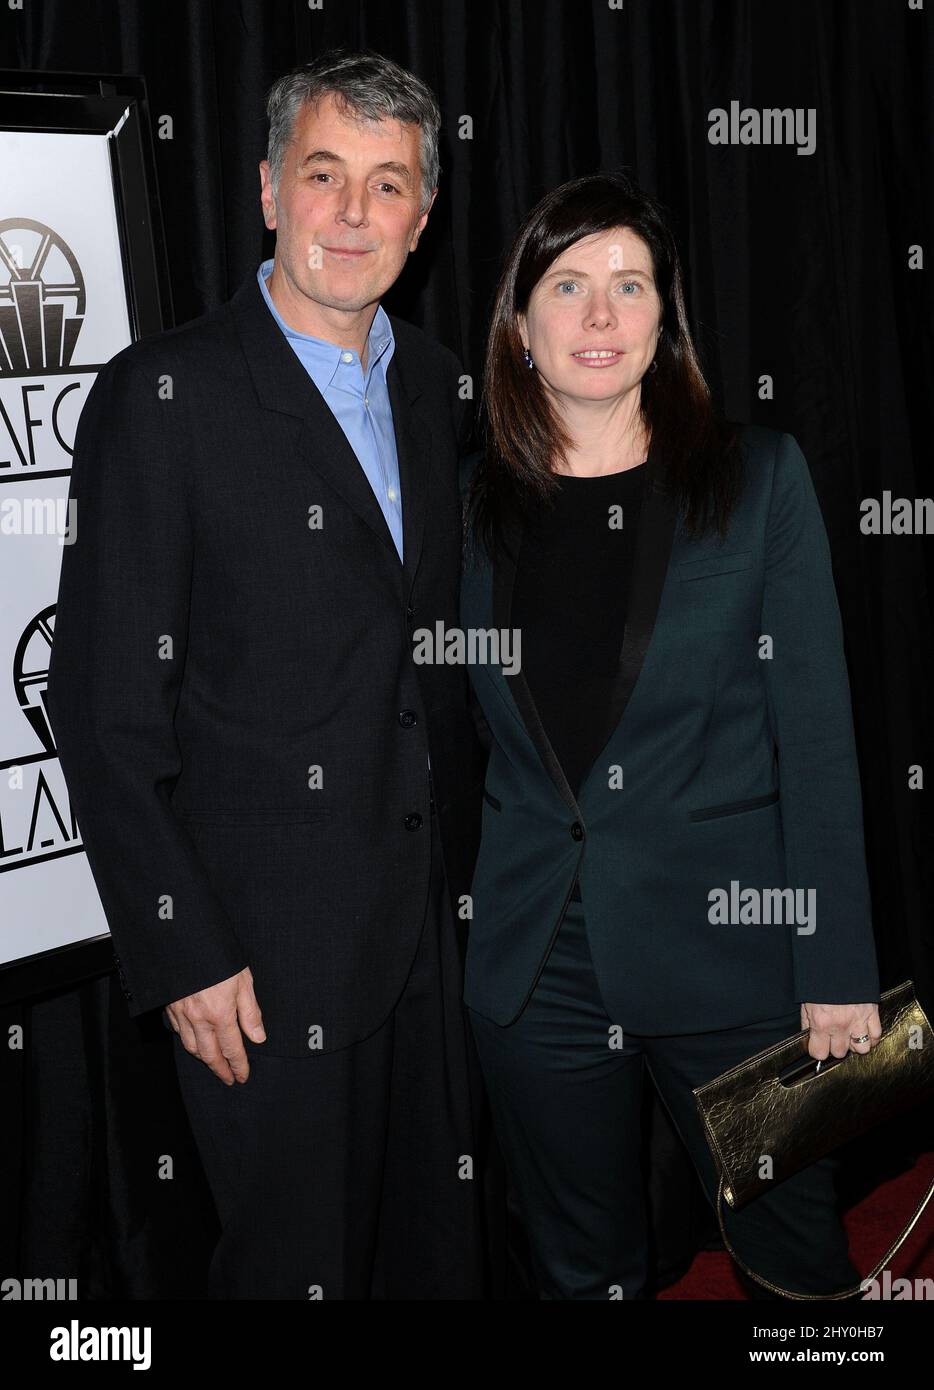 Joanne Sellar und Daniel Lupi nehmen an den Los Angeles Film Critics Association Awards 2013 in Los Angeles, Kalifornien, Teil. Stockfoto